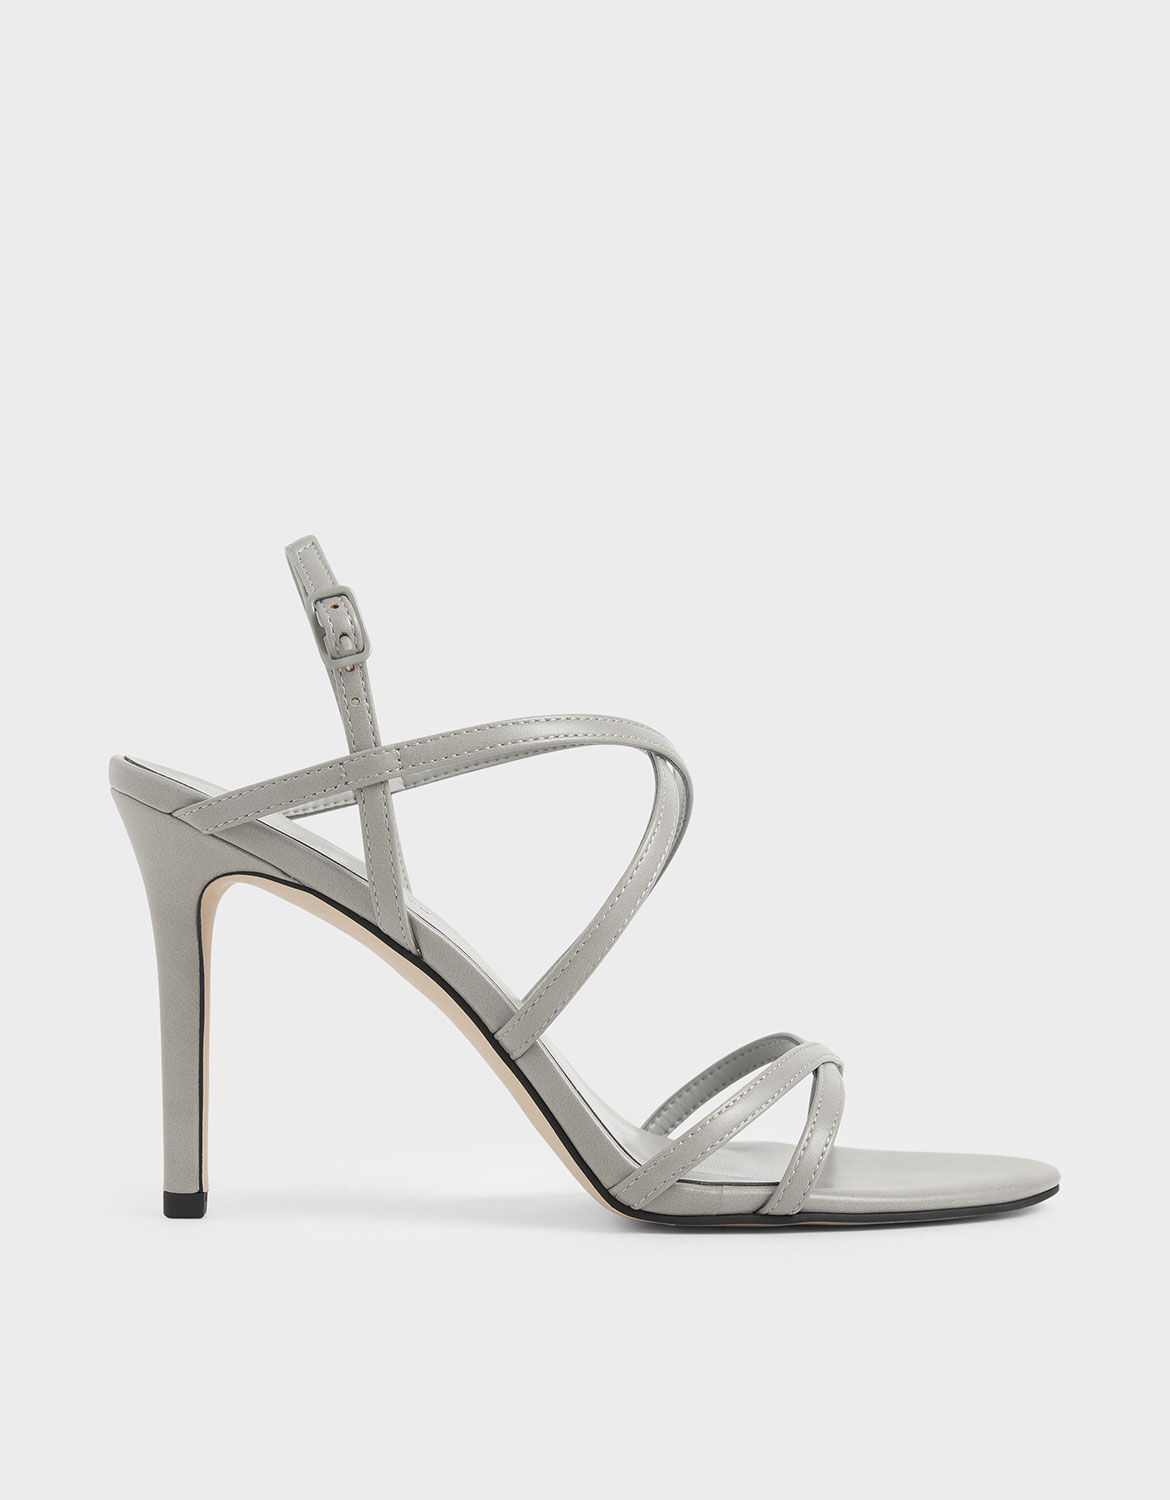 grey strappy heels